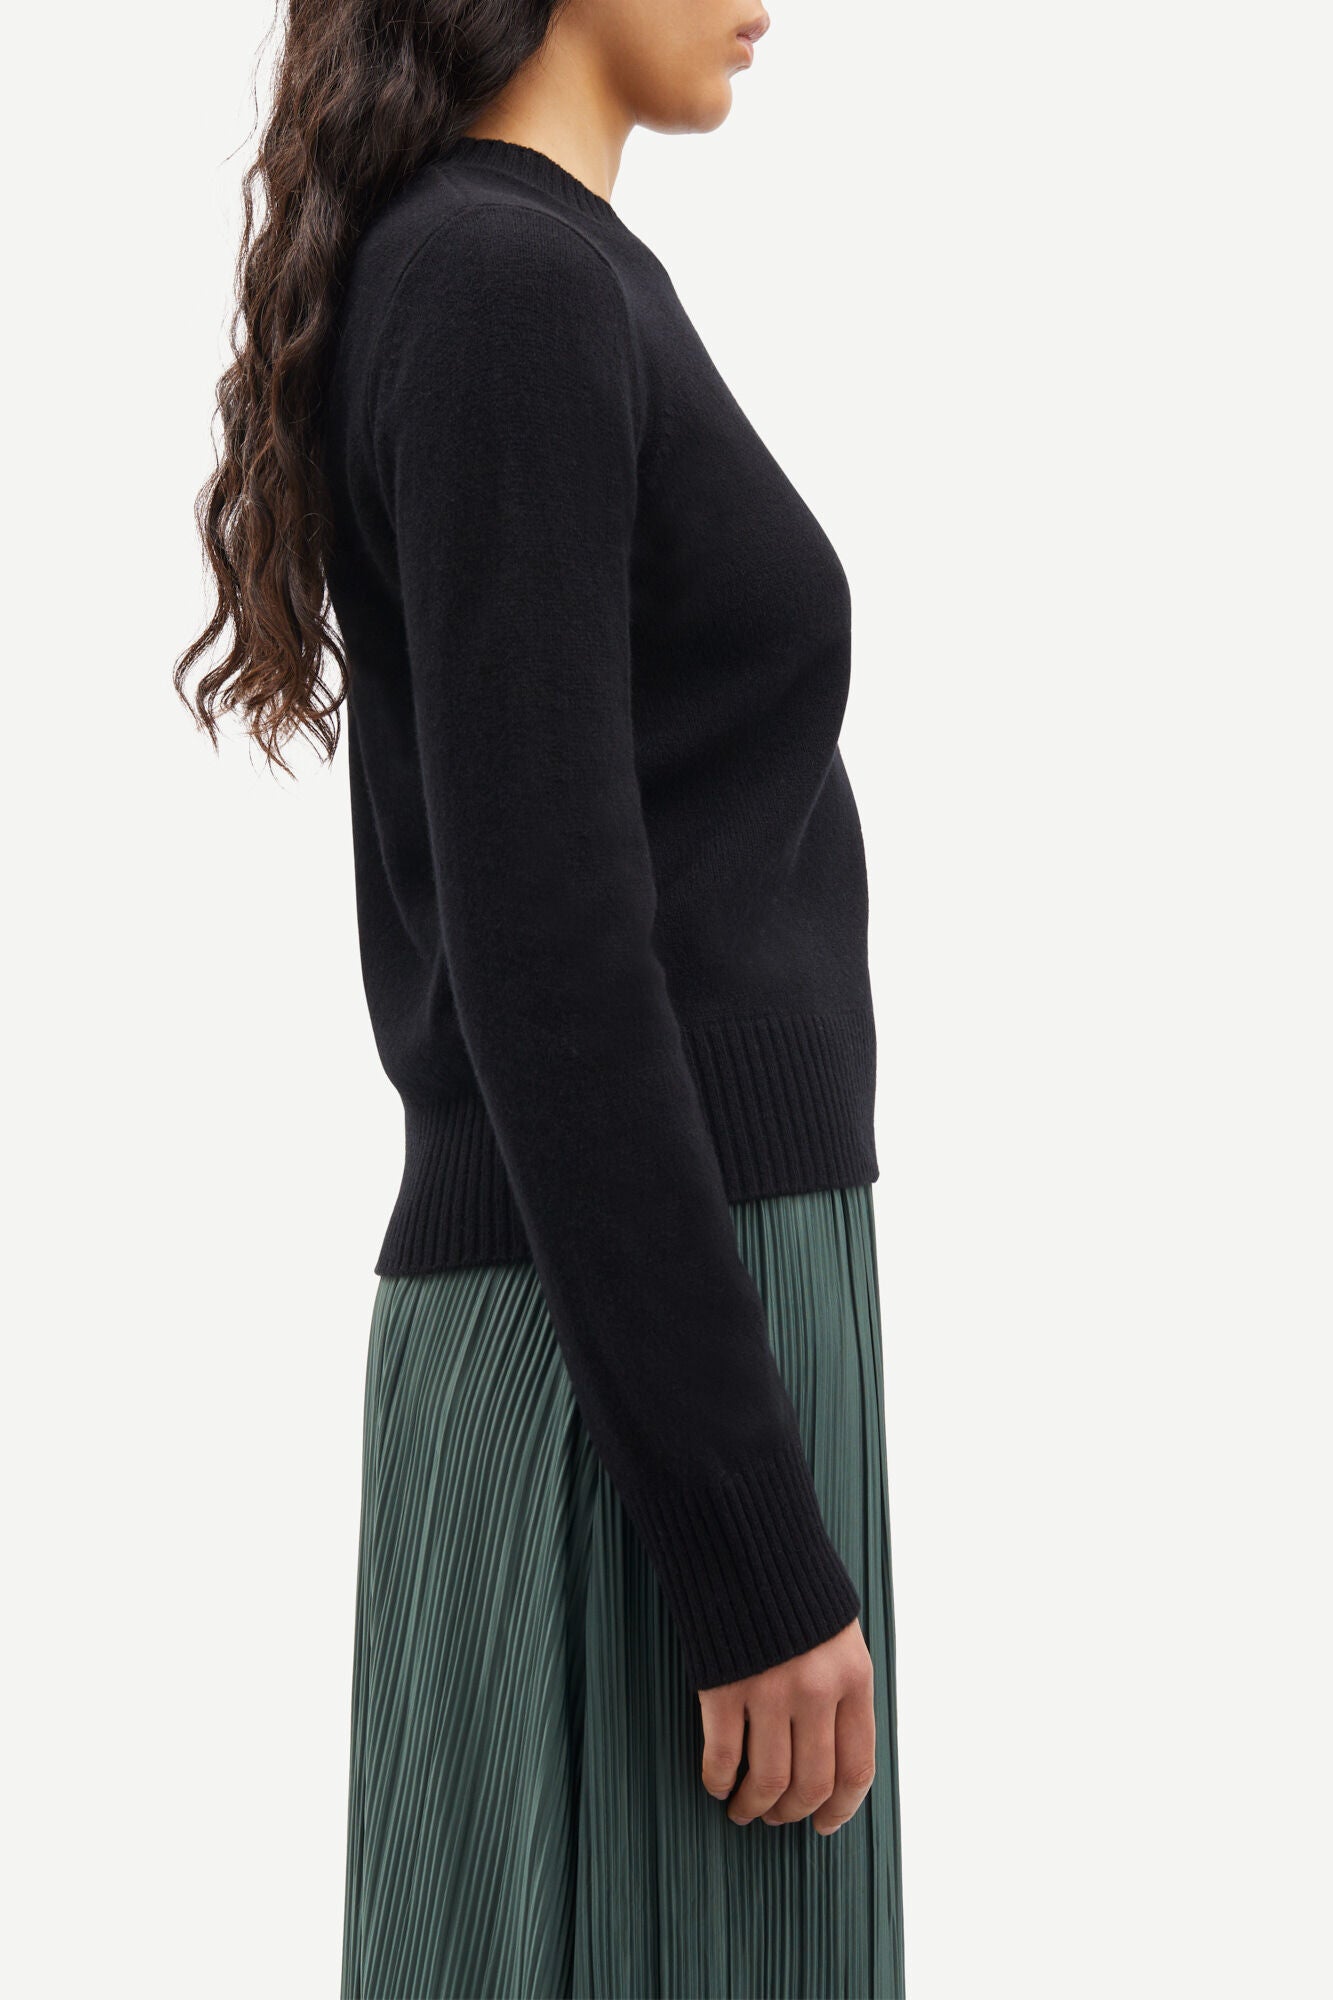 Merino knit sweater in black